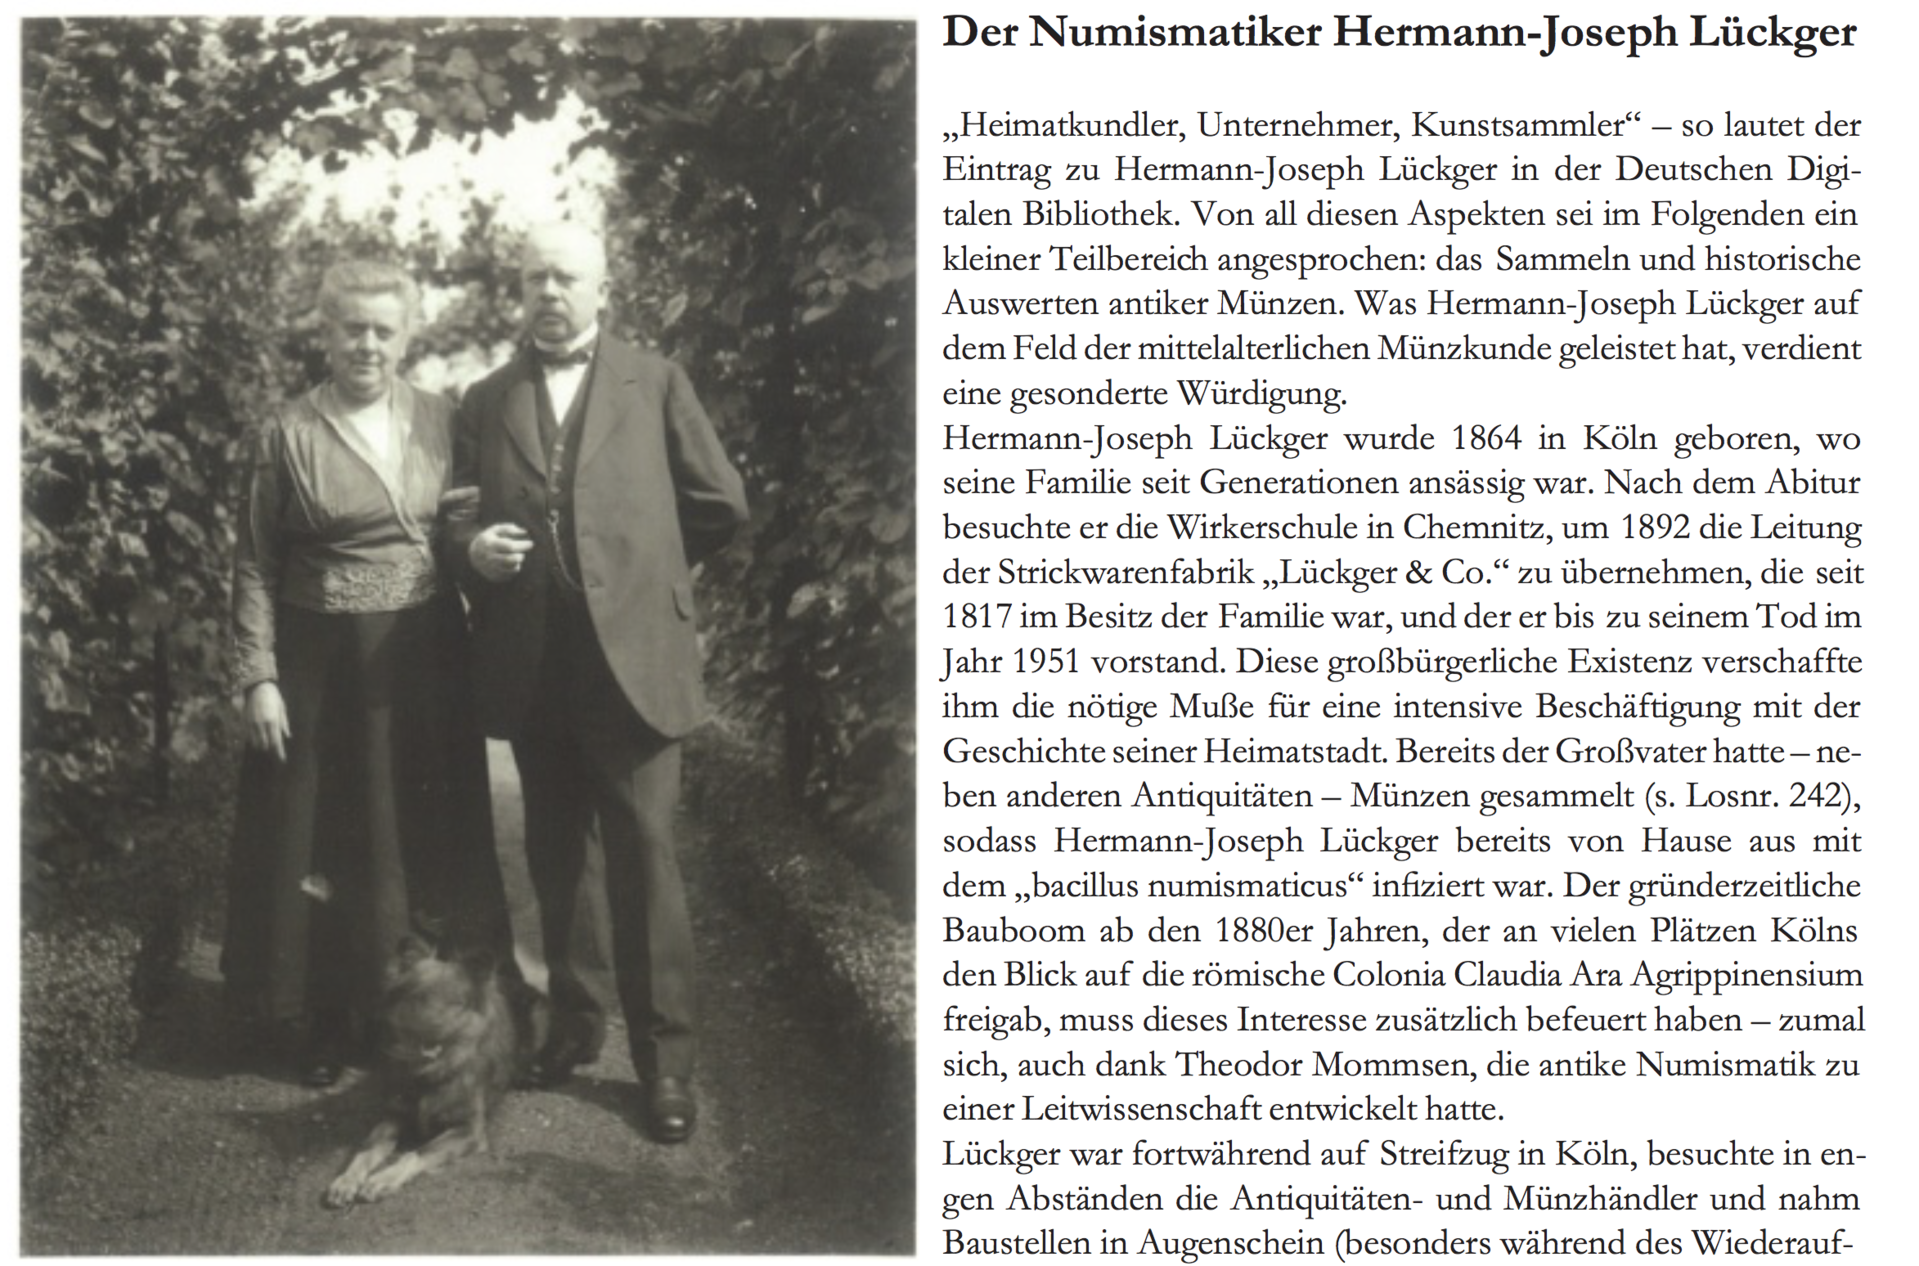 Hermann Joseph Lueckger - Koelner Numismatiker.png